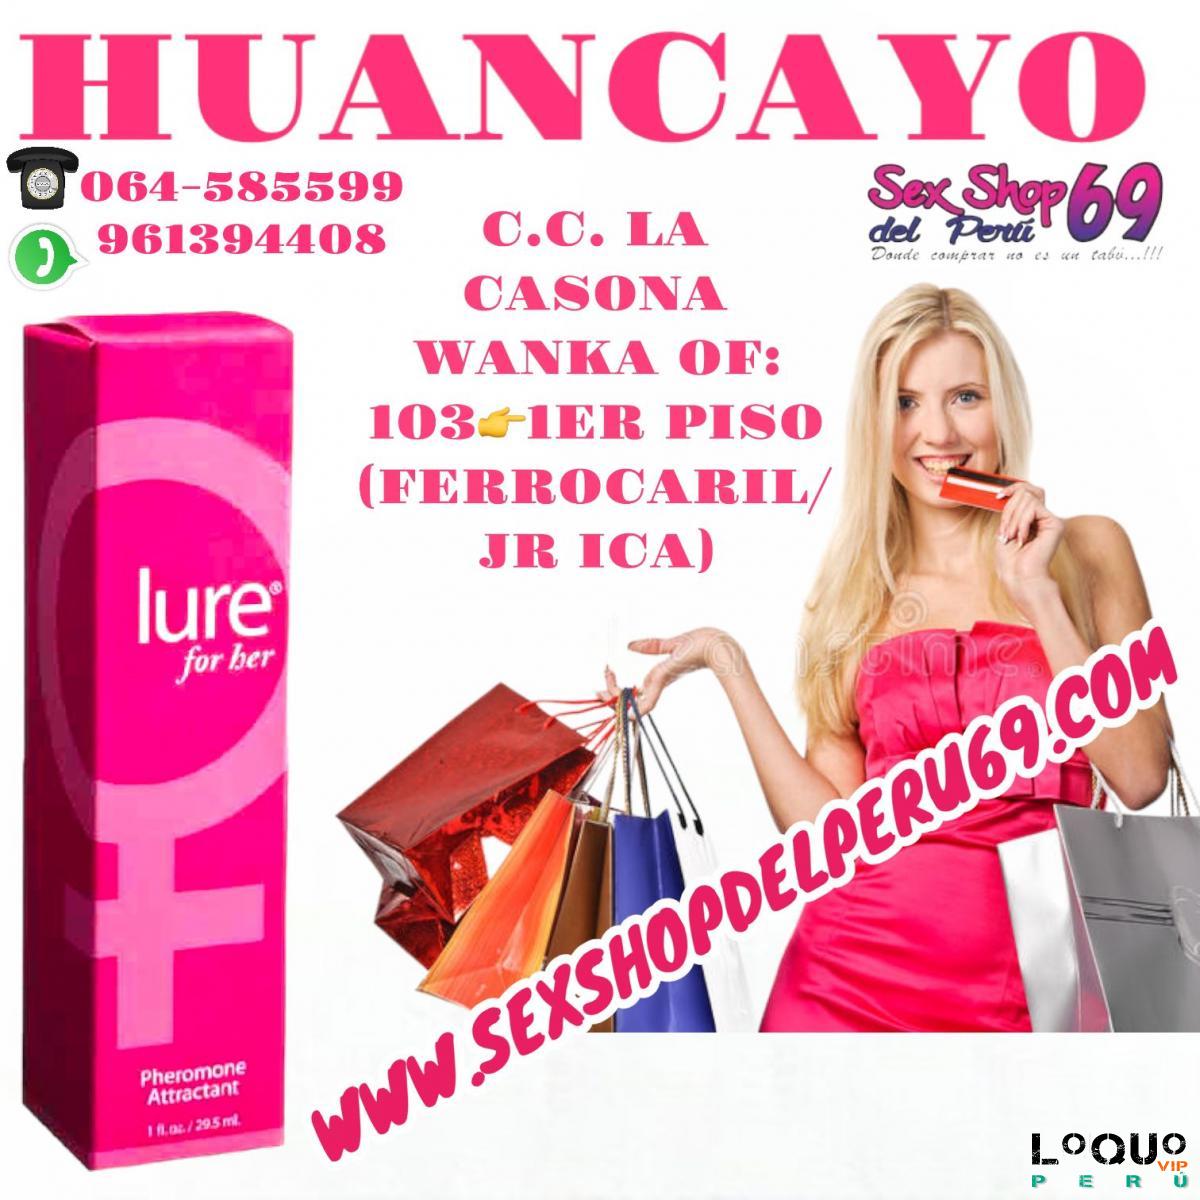 Sex Shop Arequipa: FEROMONAS_SEXSHOP69_DELIVERY +51 924700691